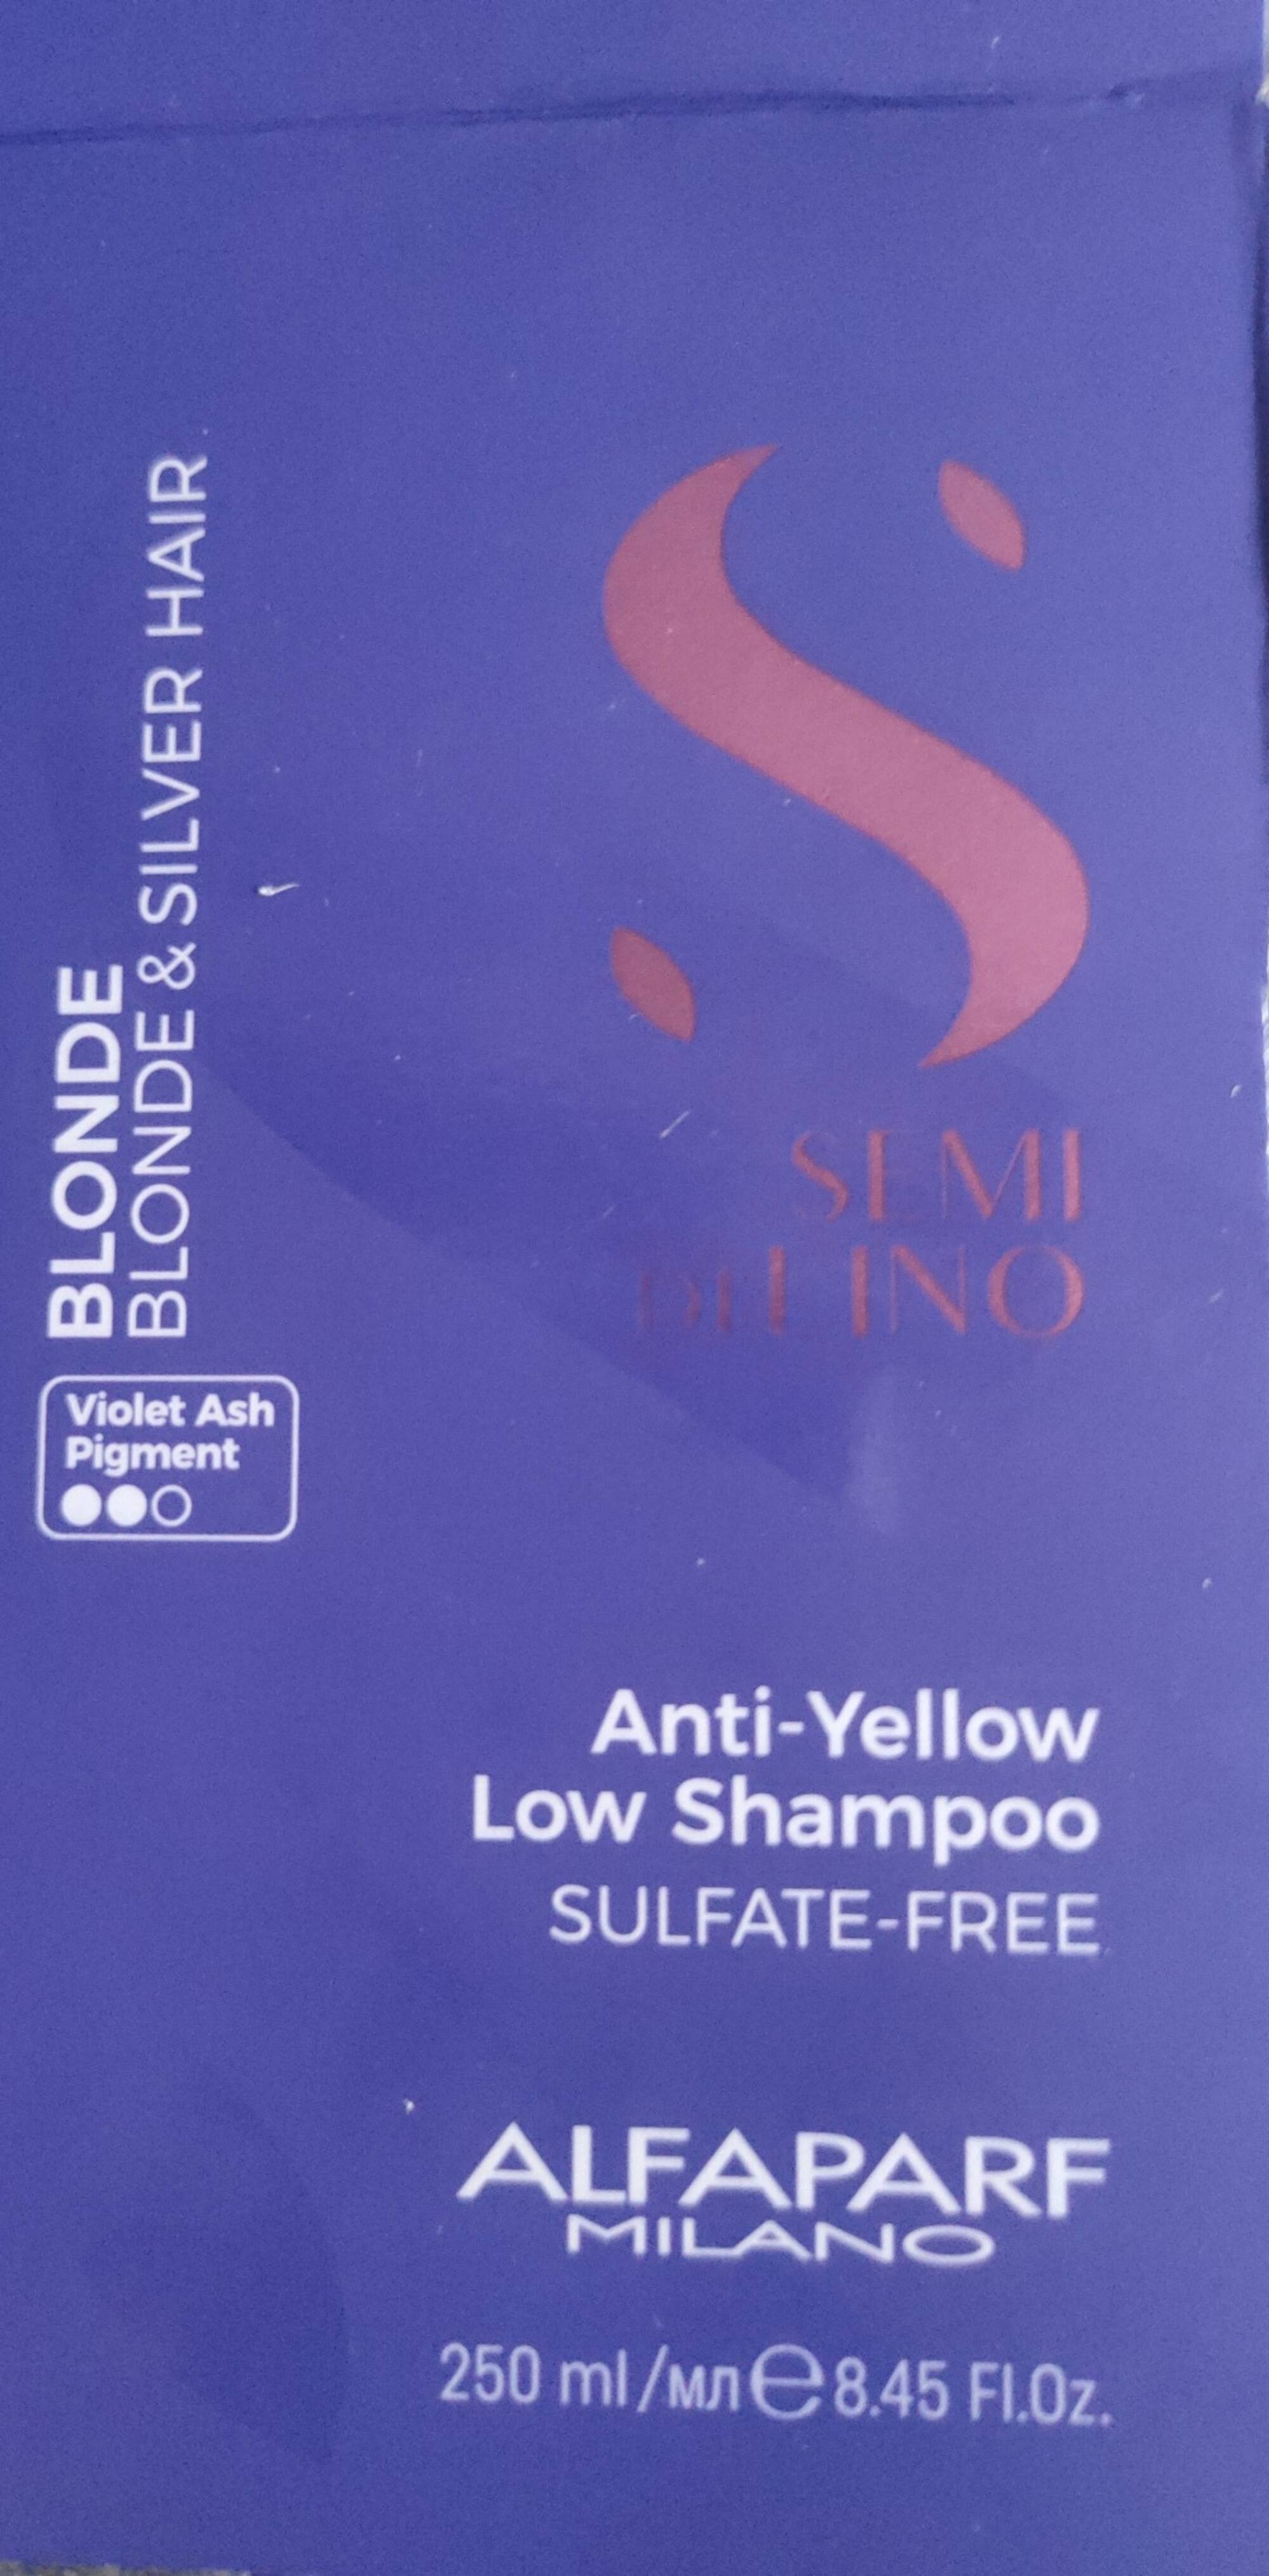 ALFAPARF MILANO - Blonde & silver hair -  Anti-yellow low shampoo